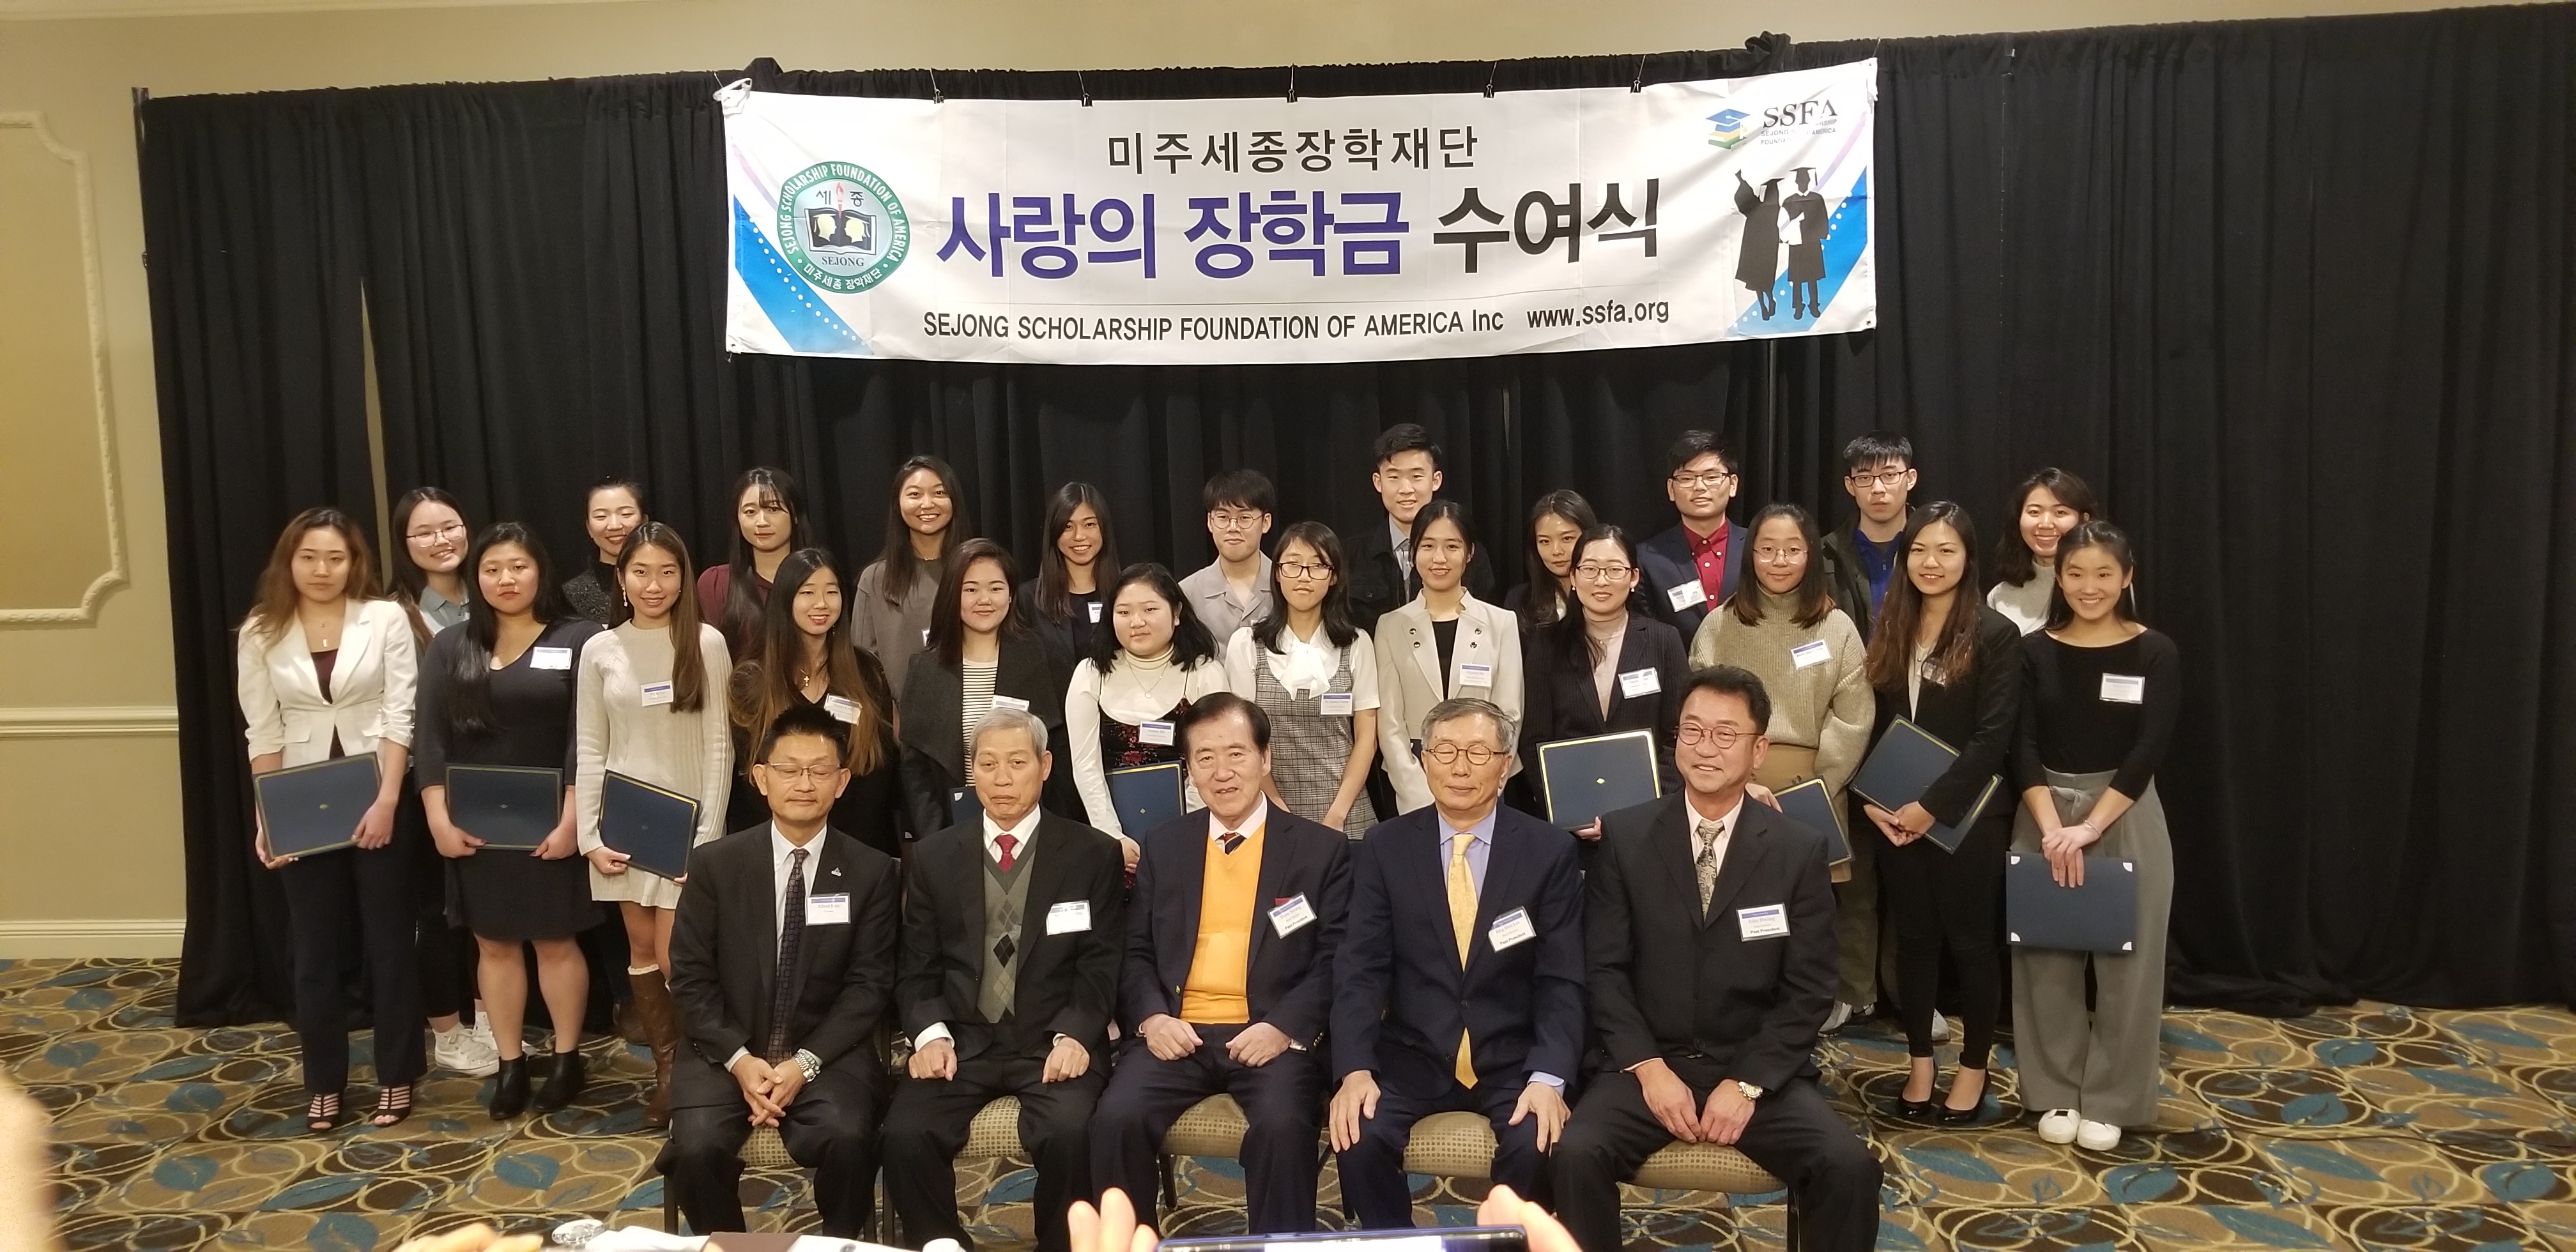 Students Group Photo - 2019 Sejong Scholarship Foundation of America (SSFA) Scholarship Award Ceremony